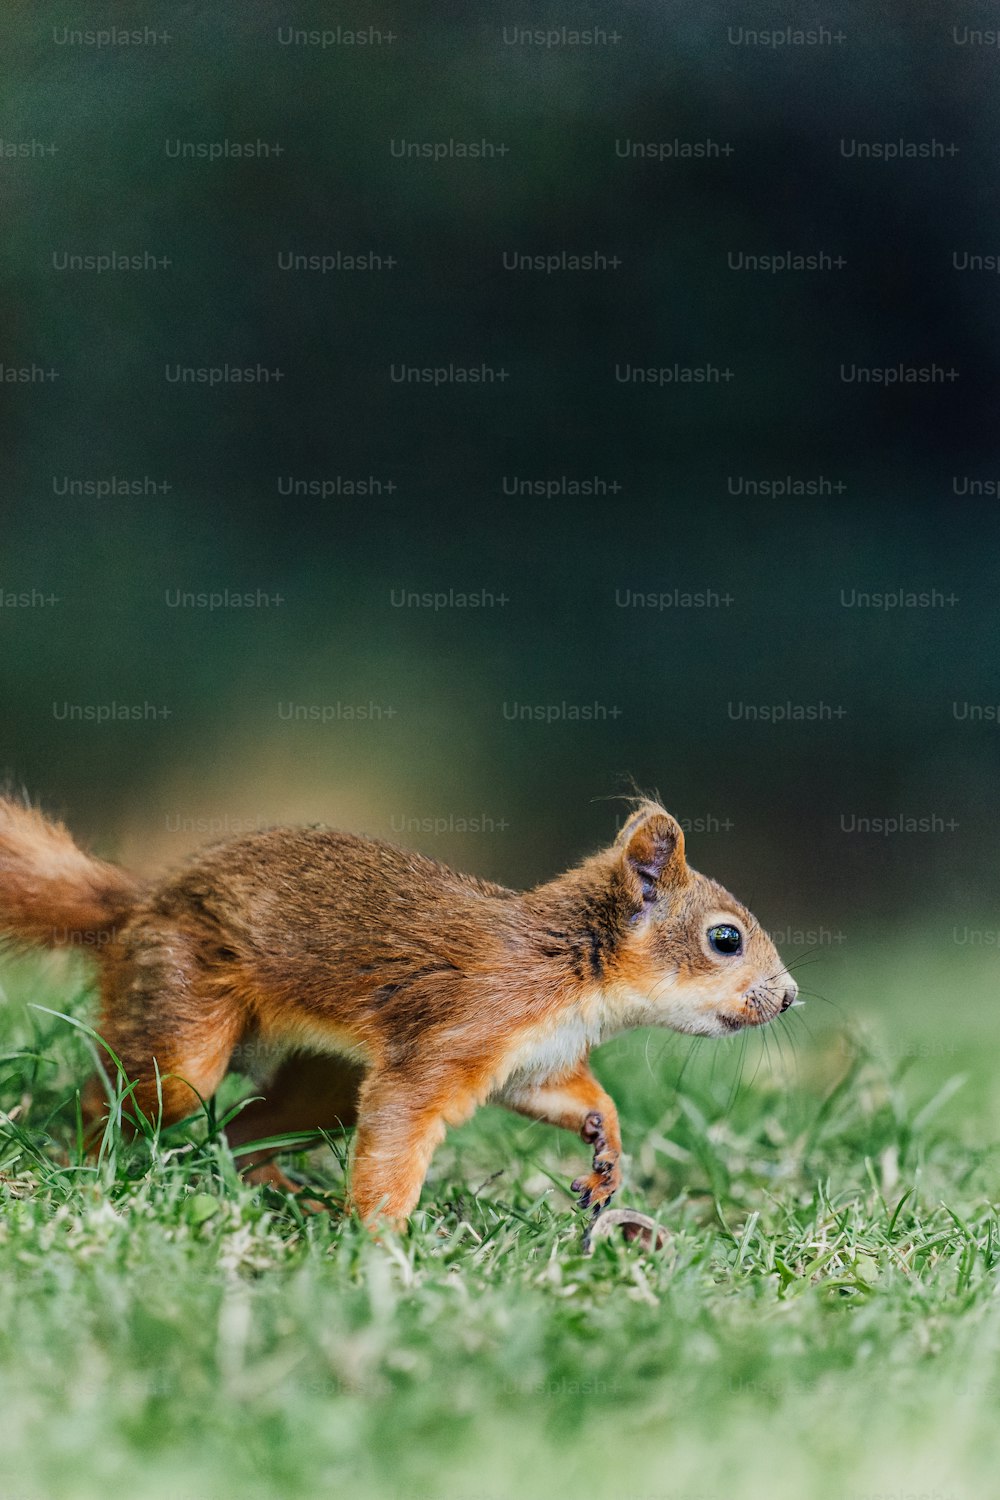 a small squirrel walking across a lush green field